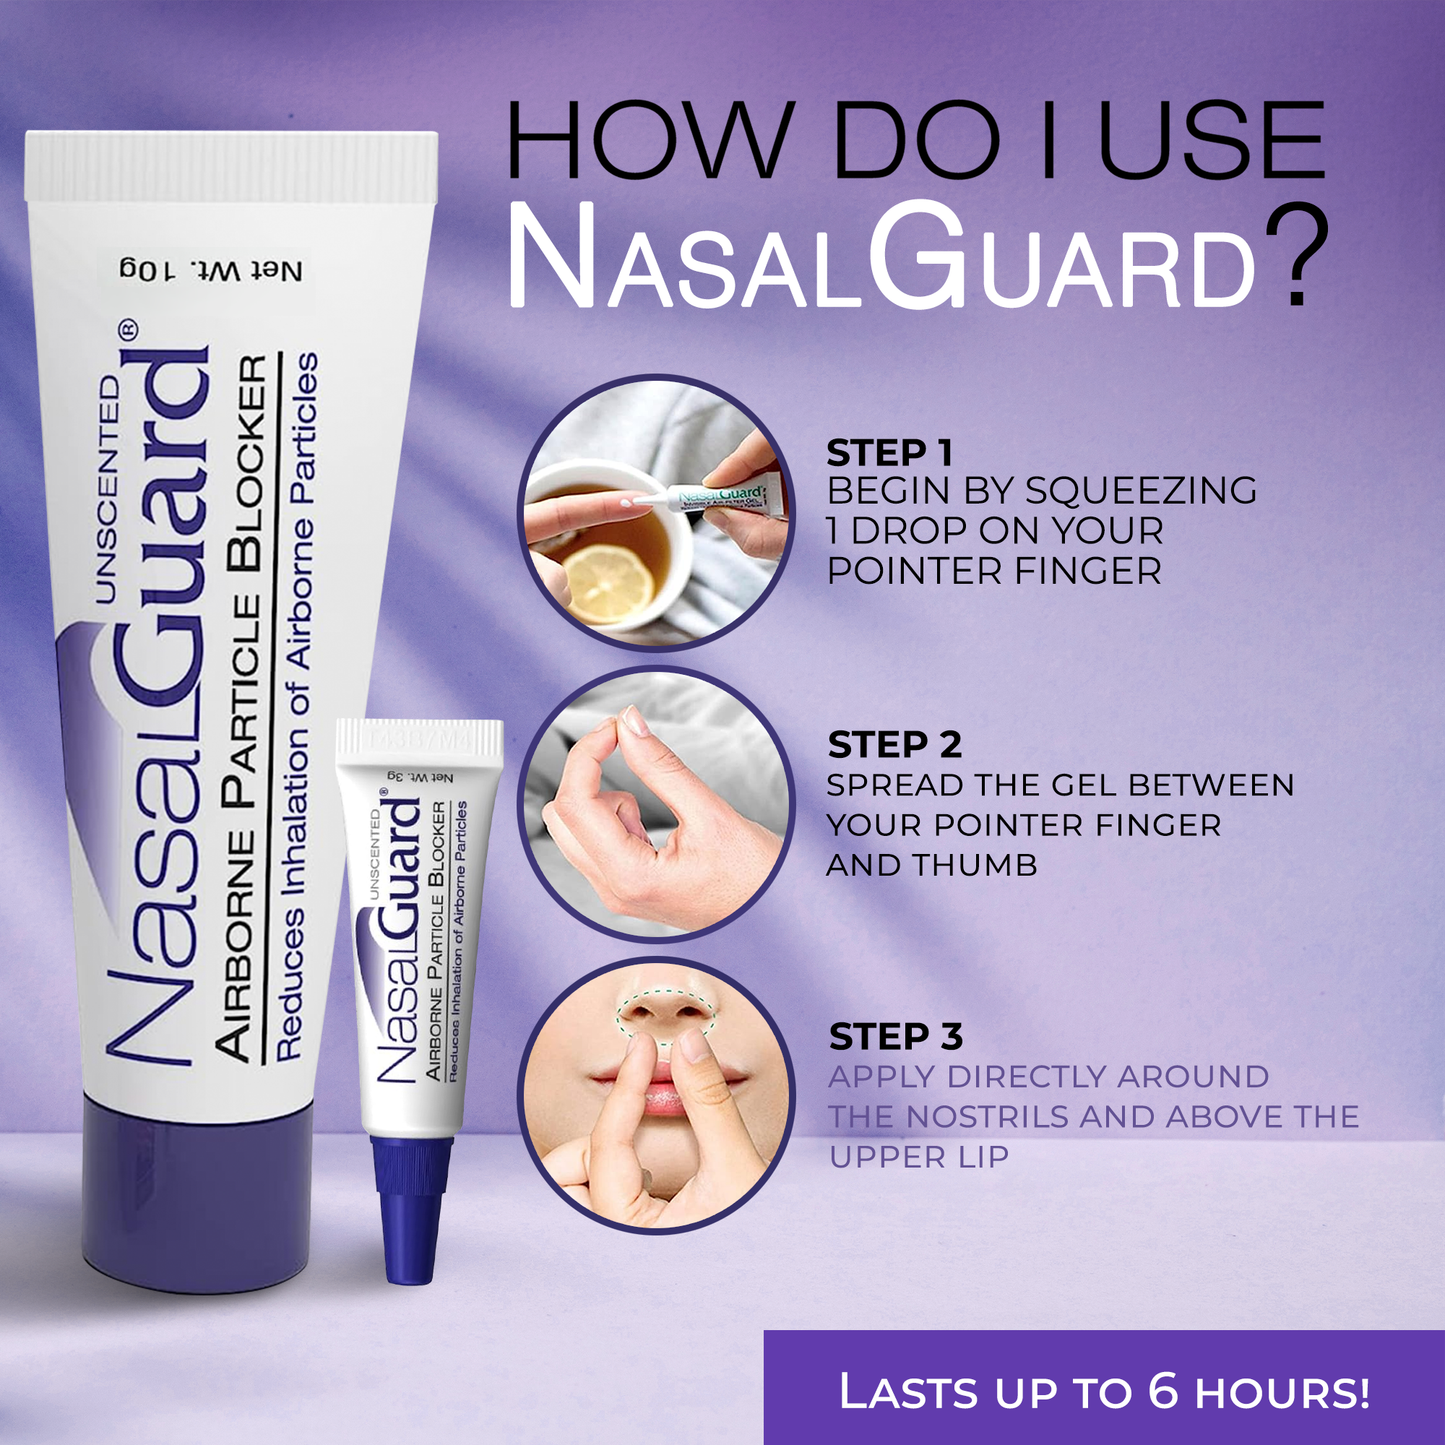 NasalGuard Airborne Particle Blocker, Allergy Relief Nasal Gel | Unscented | 10g Tube